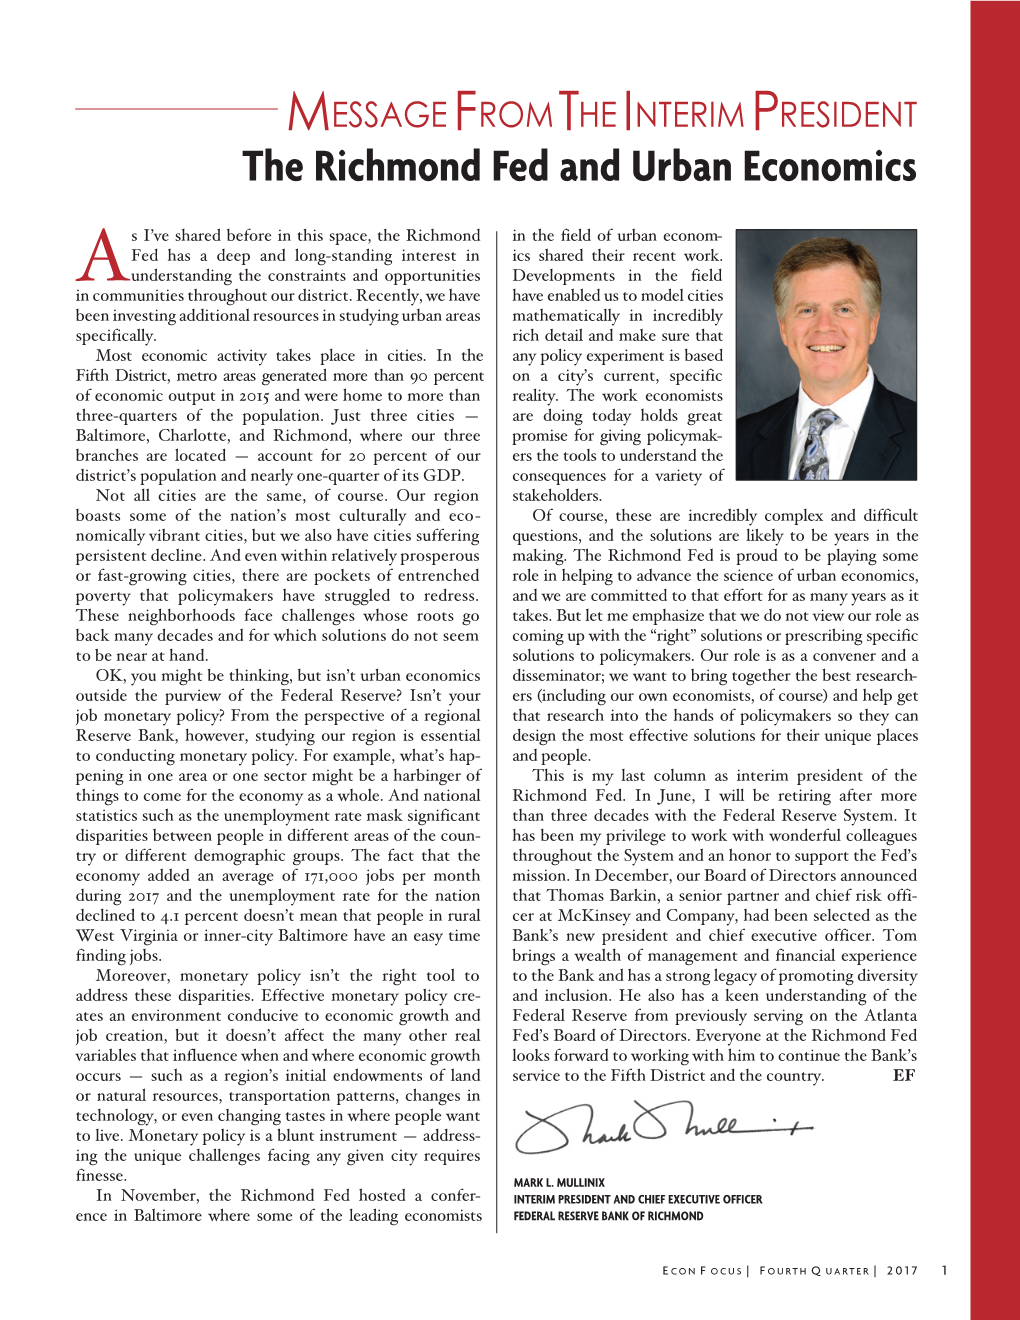 The Richmond Fed and Urban Economics